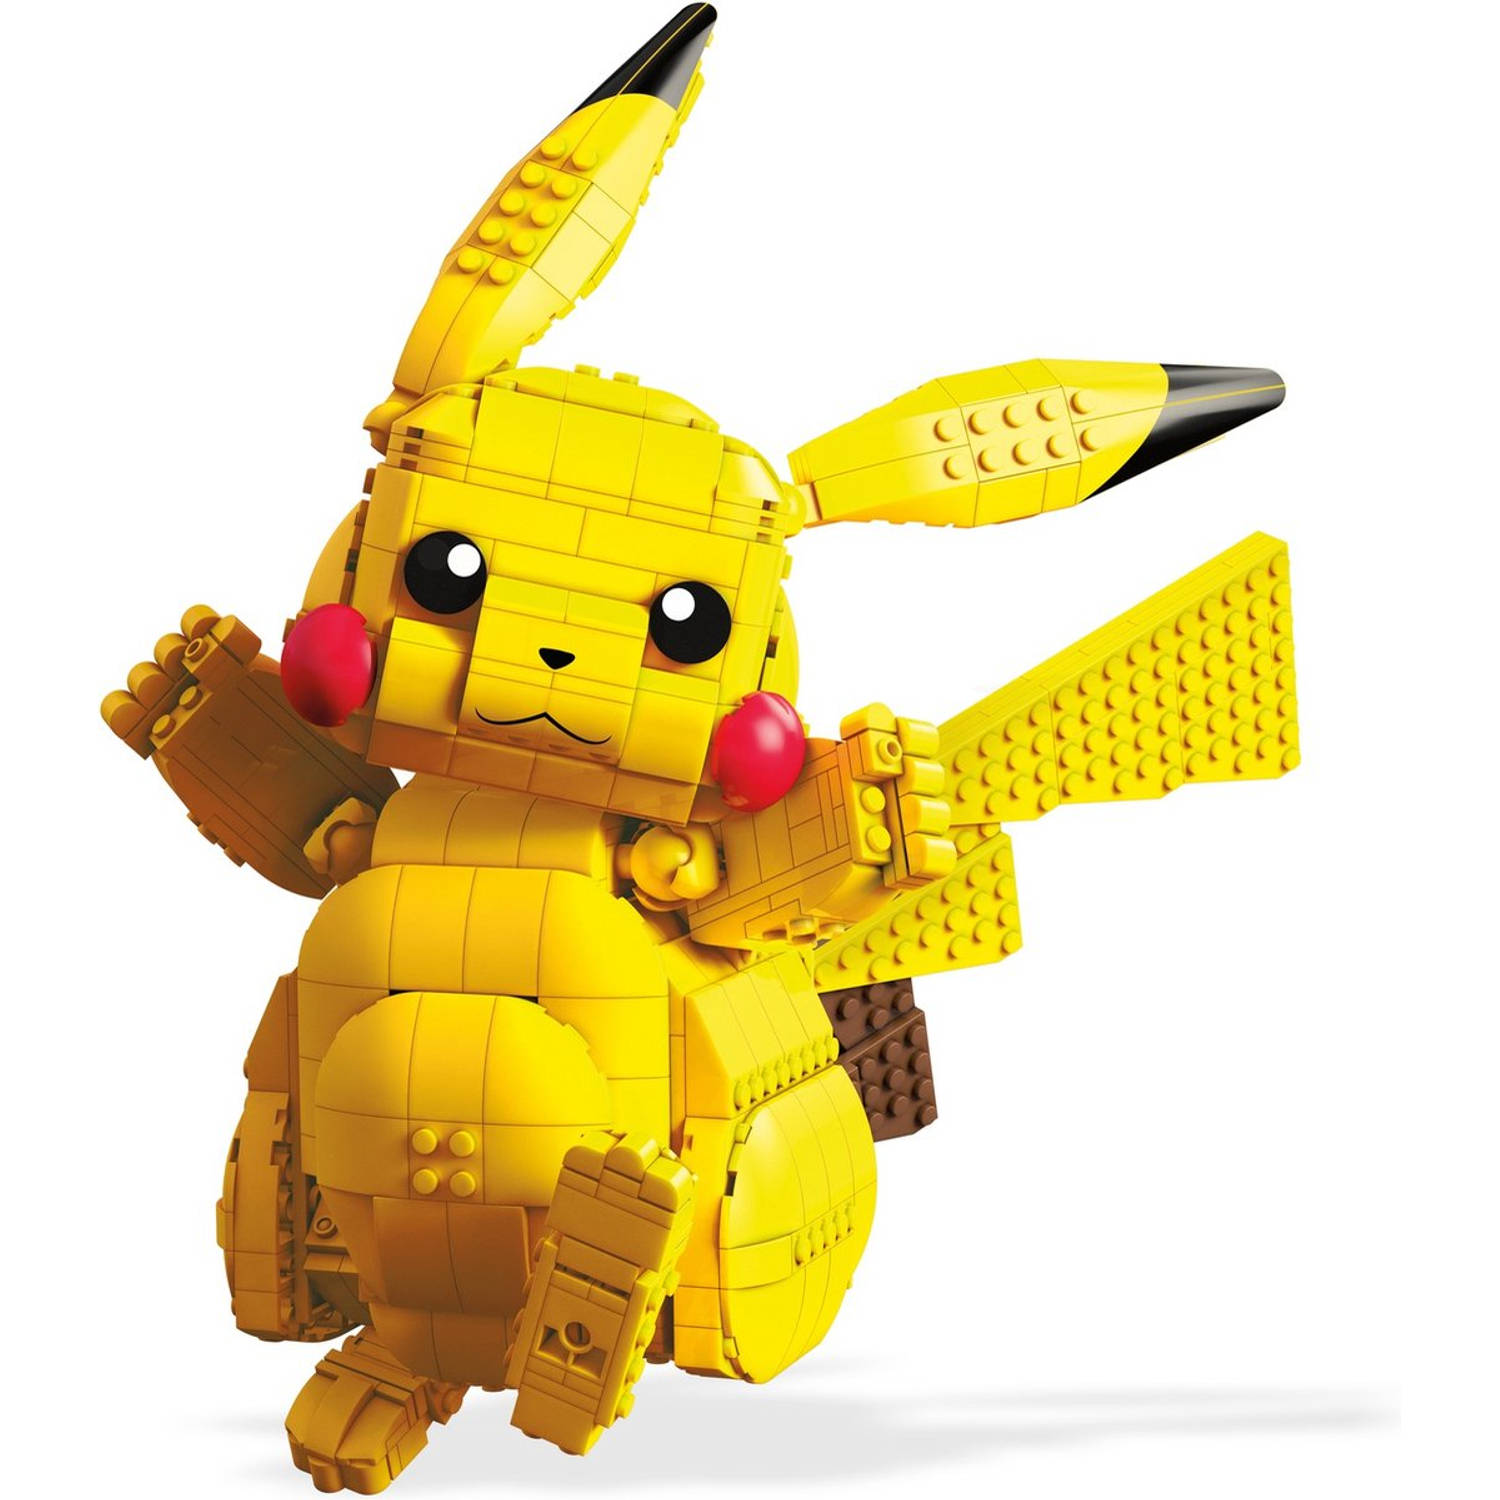 Mega Construx Pokémon Jumbo Pikachu bouwset - 825 bouwstenen